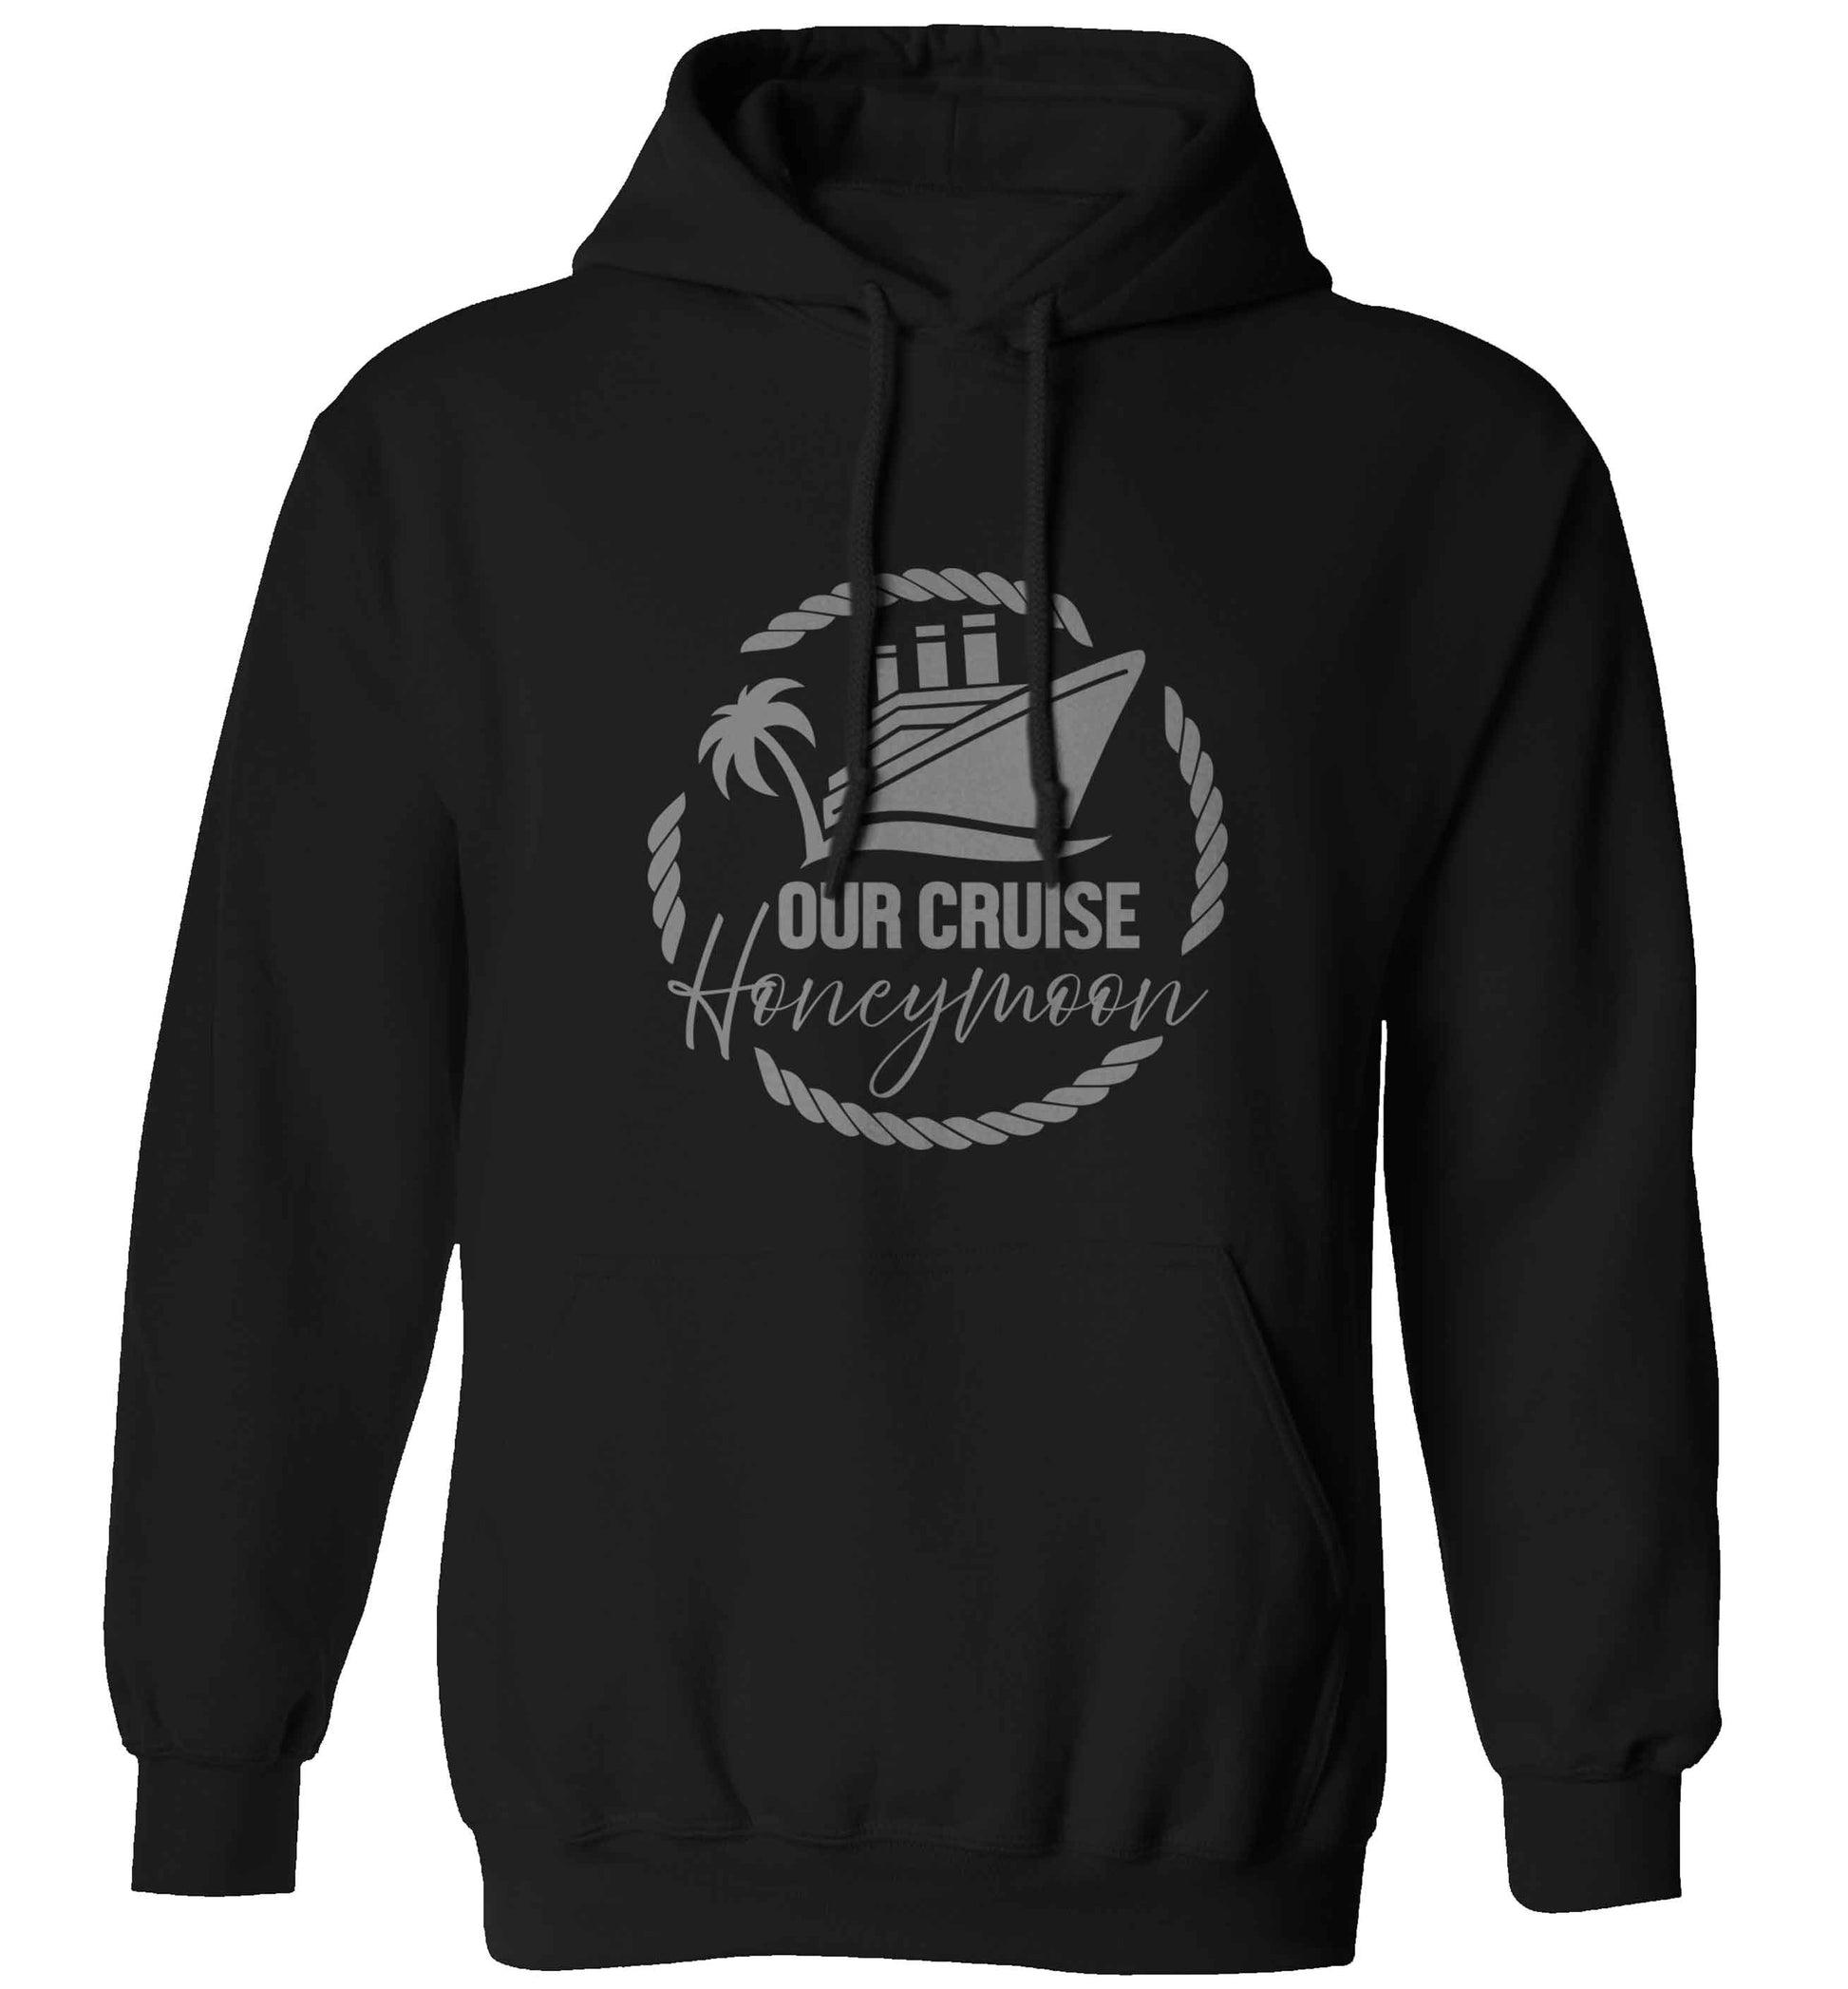 Our cruise honeymoon adults unisex black hoodie 2XL